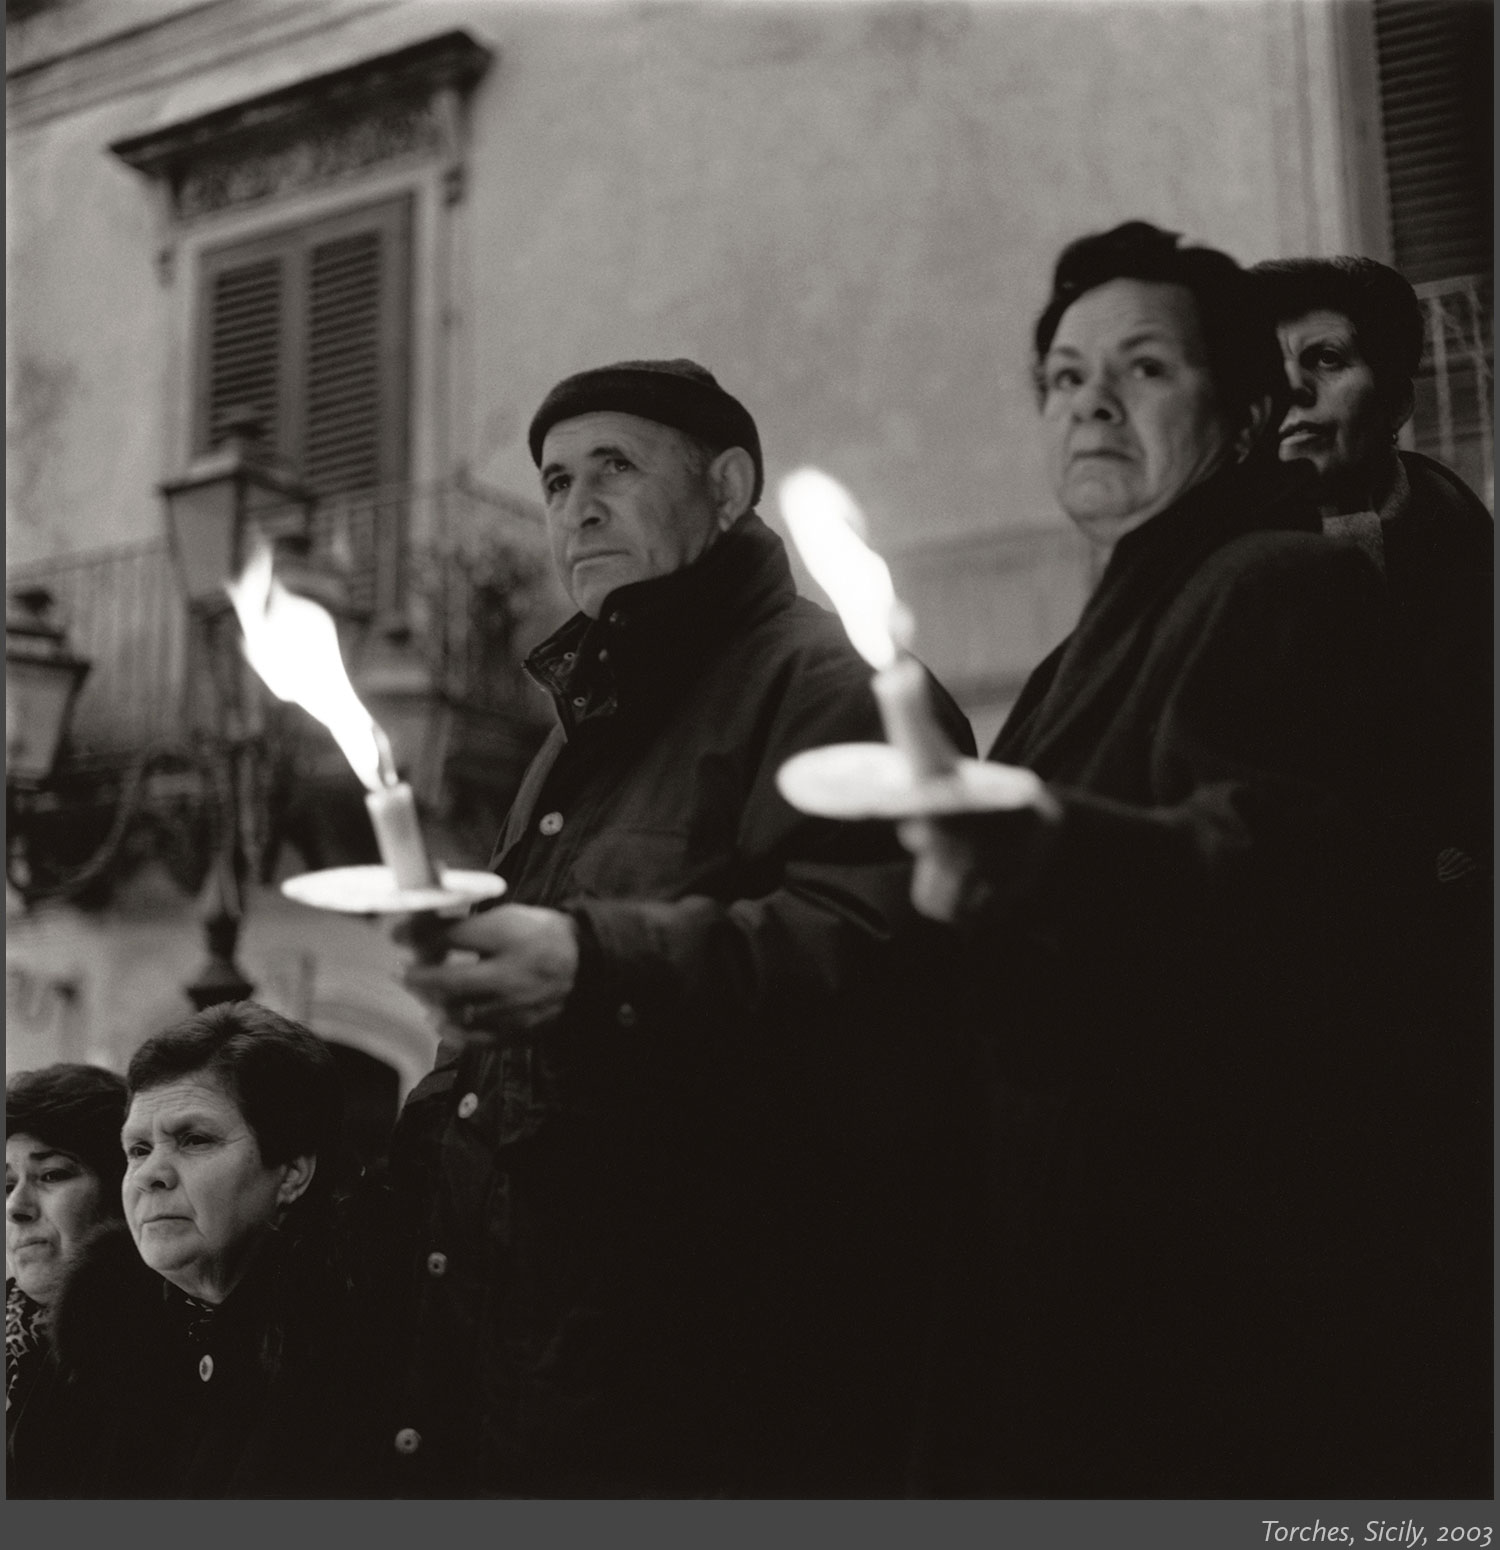 1_Torches,-Sicily,-2003.jpg